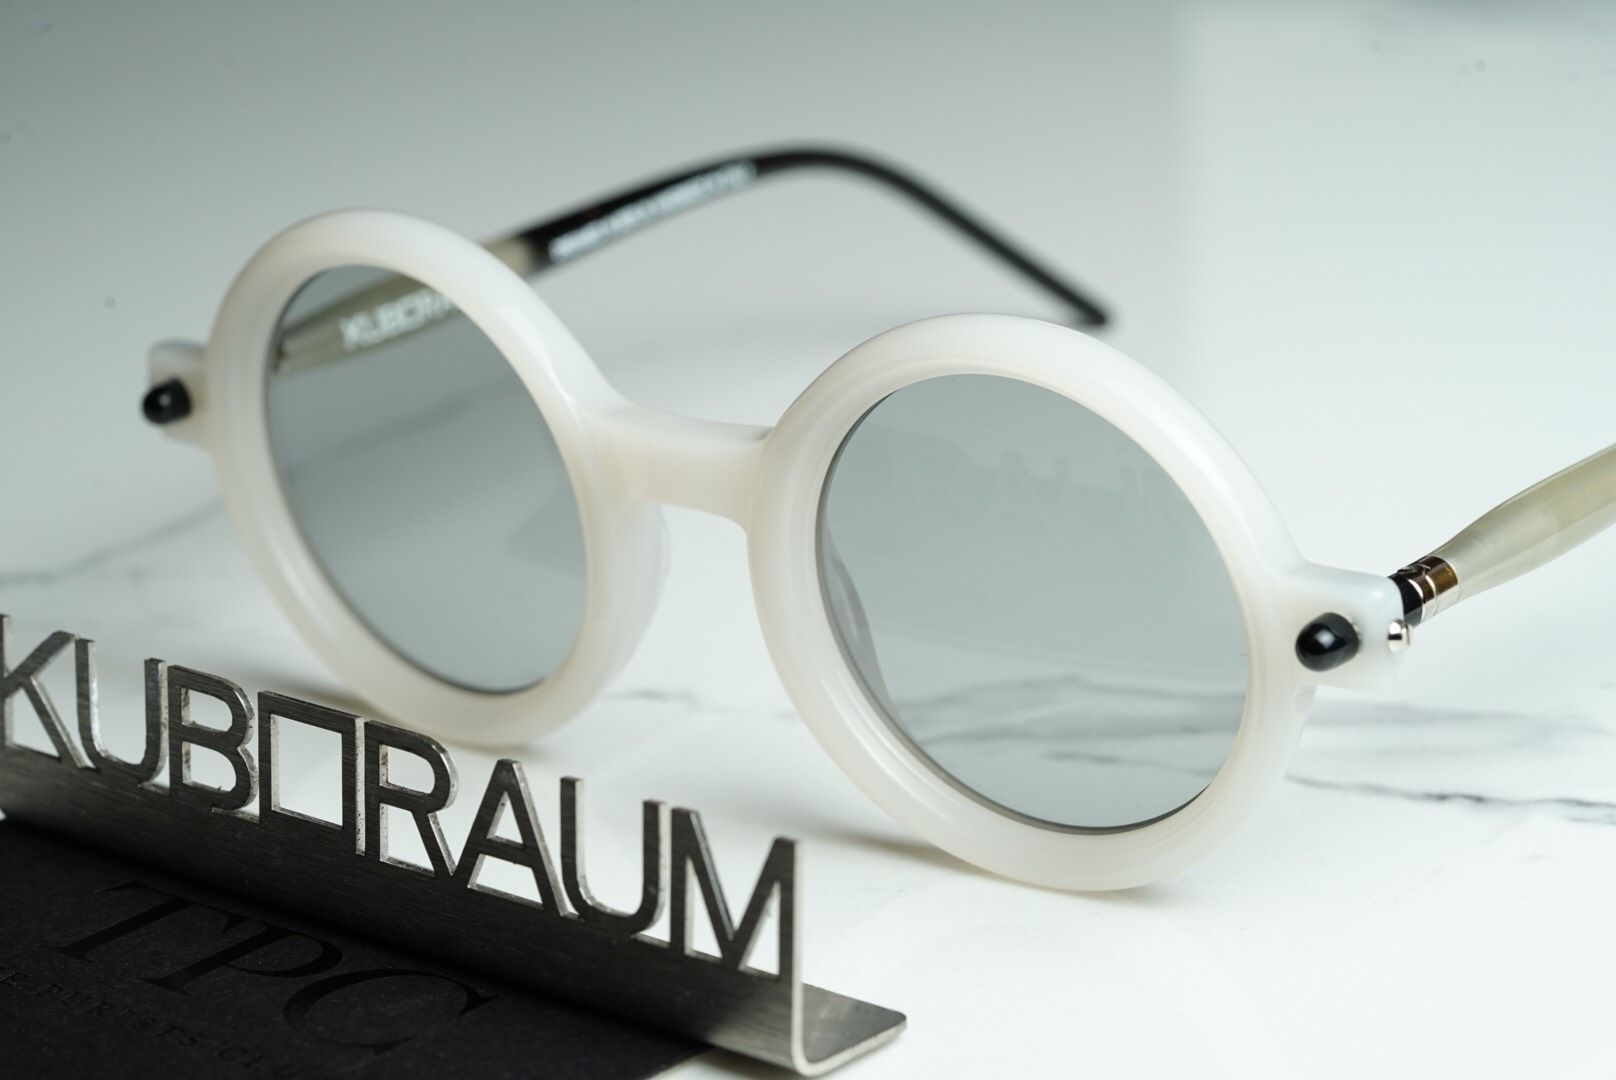 Kuboraum glasses for sale